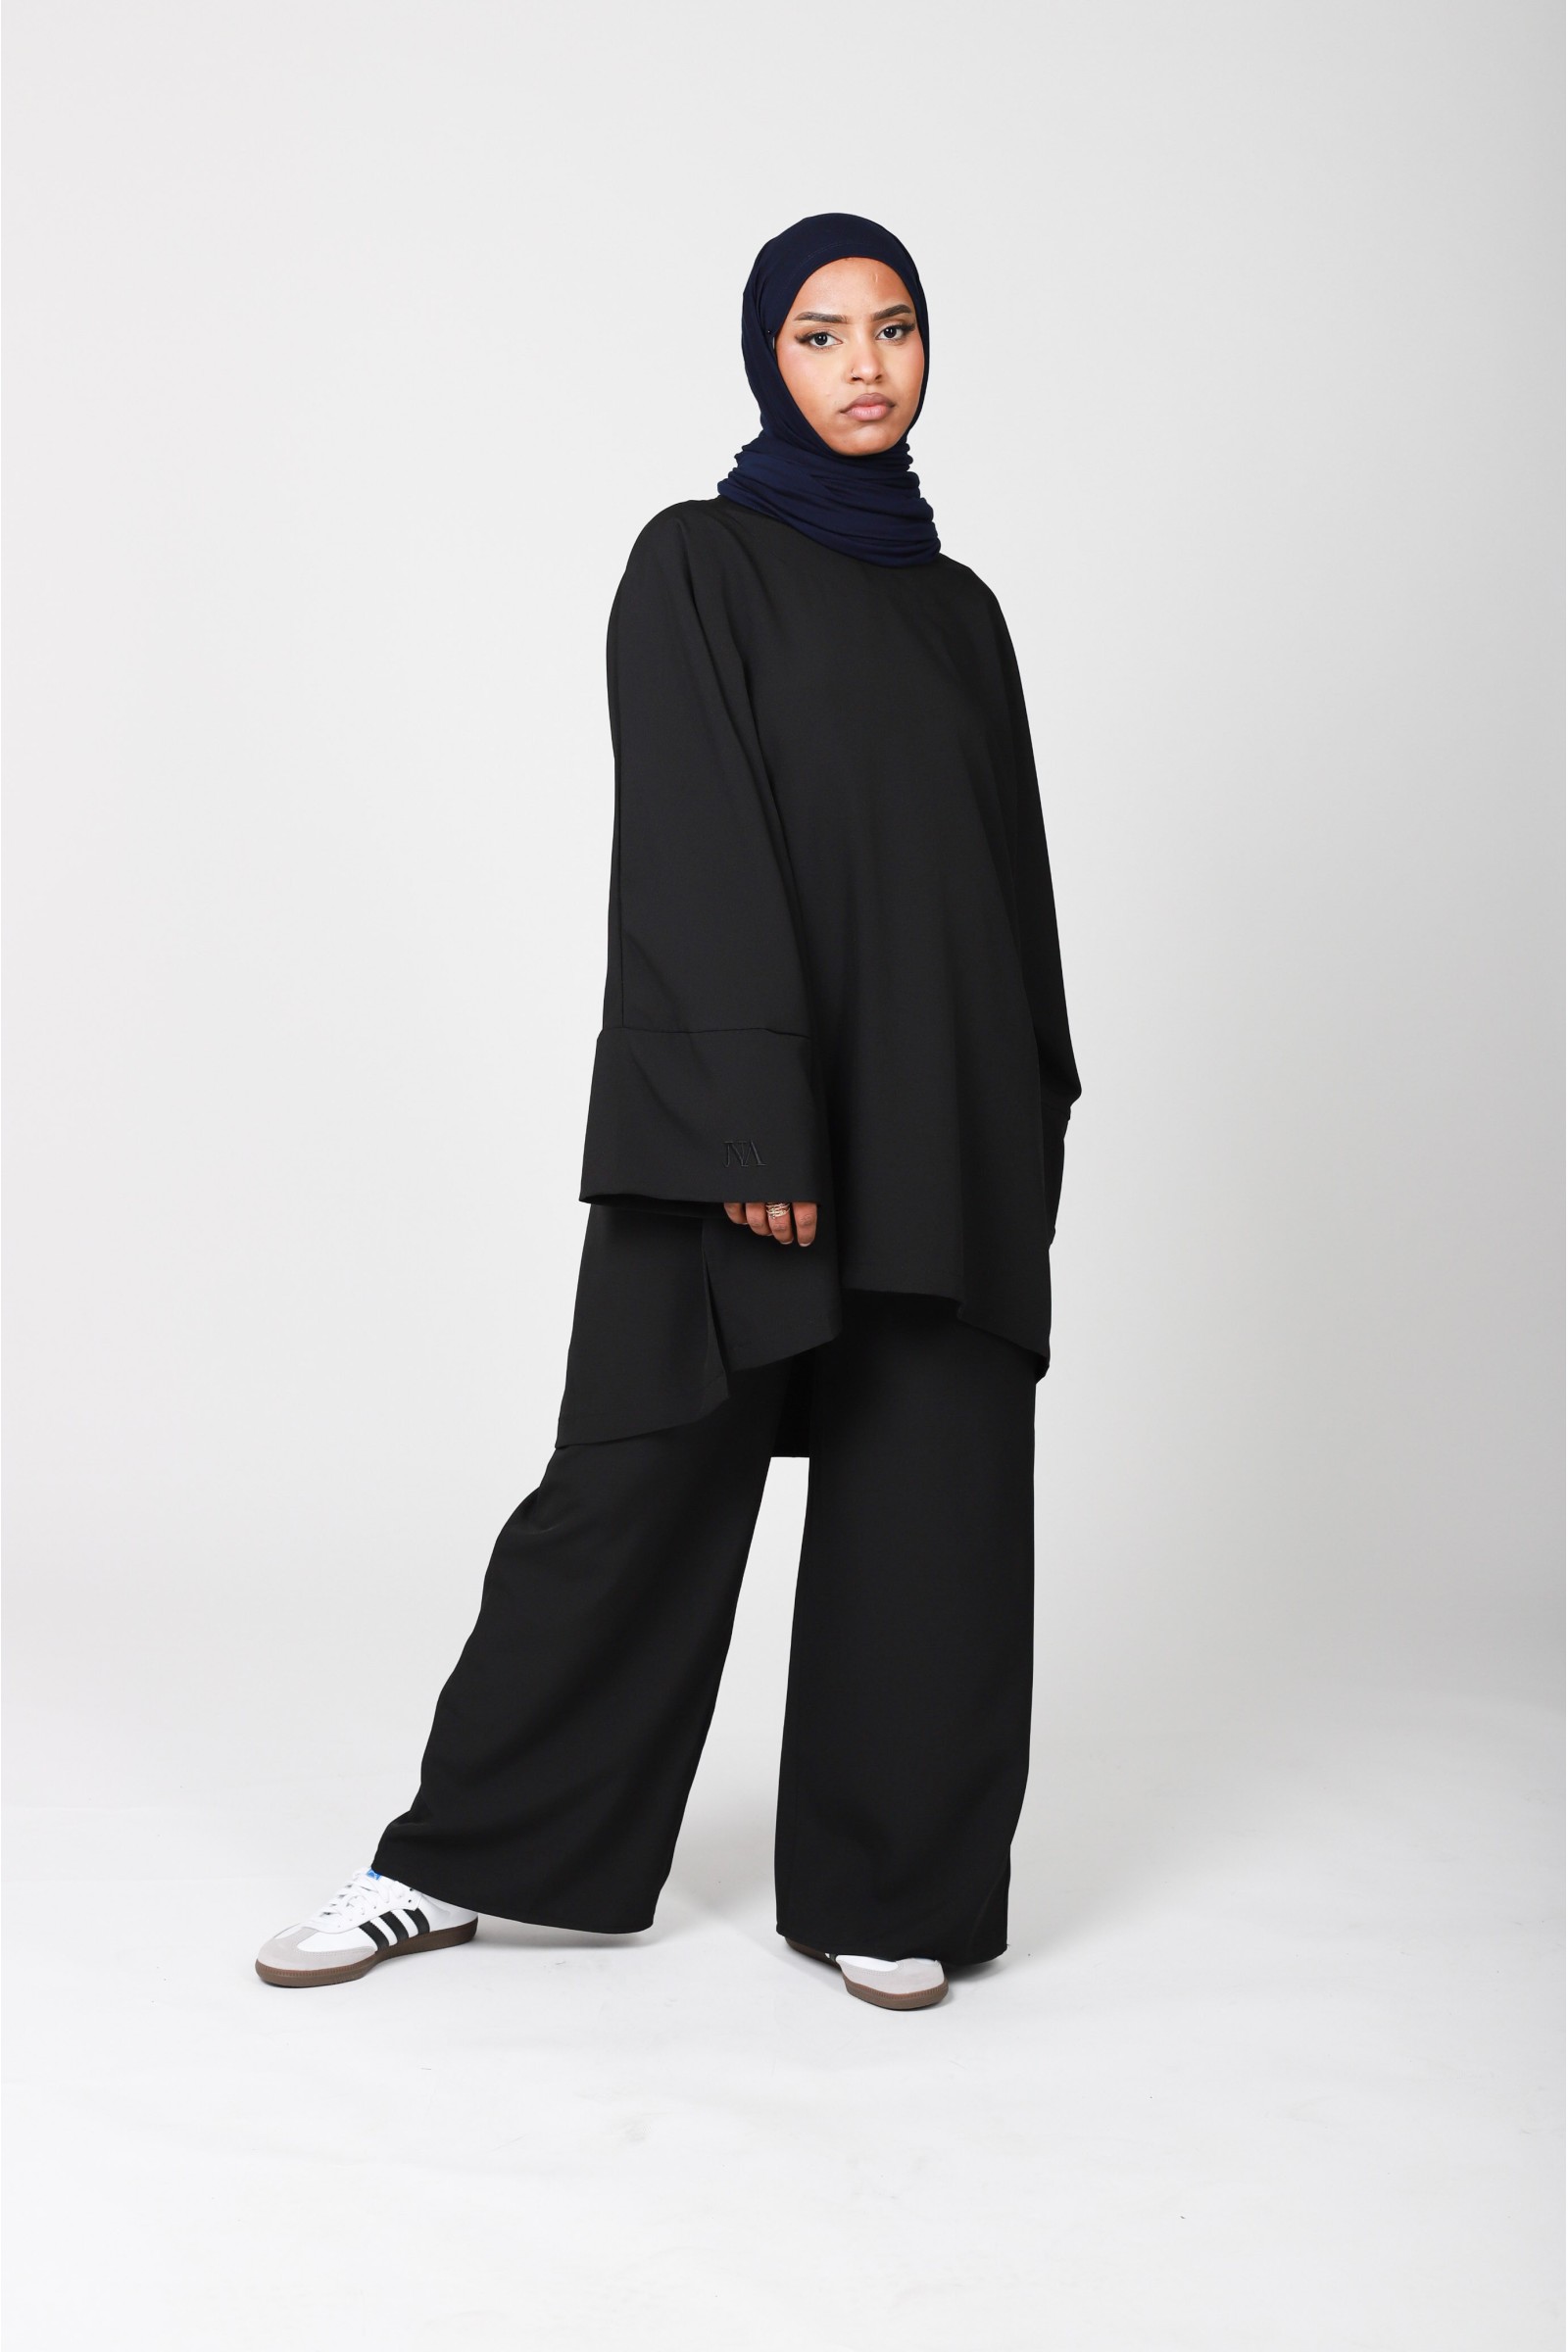 Ensemble pantalon modeste pour femmes musulmanes 2024